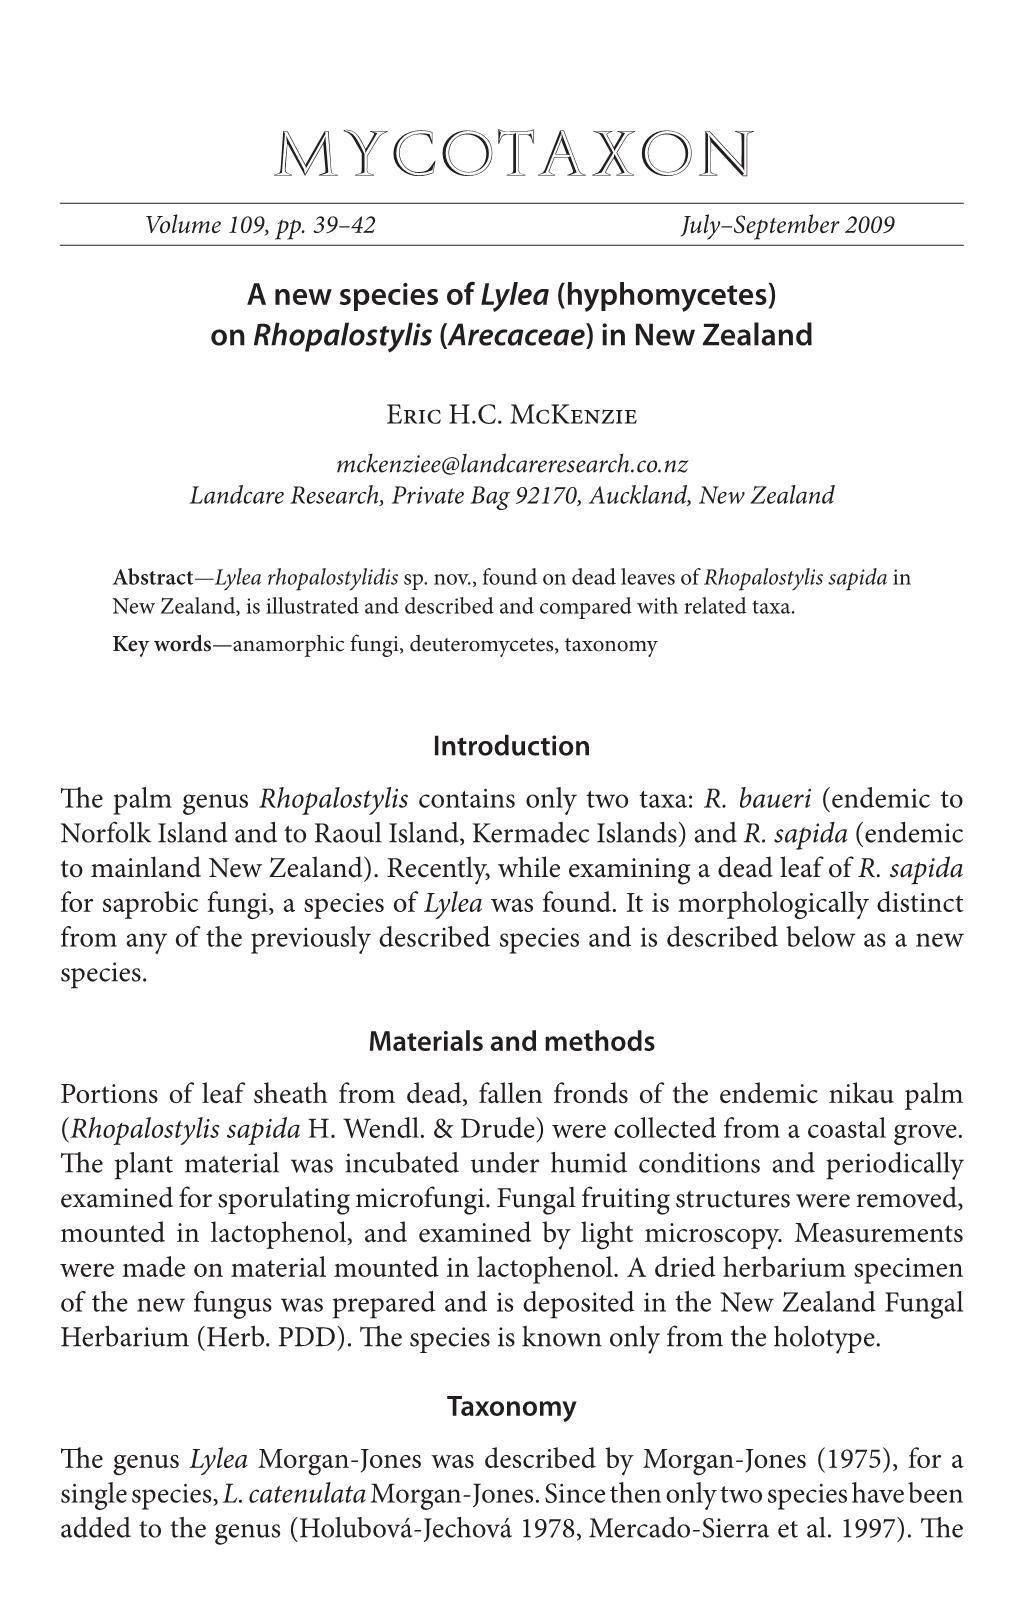 (Hyphomycetes) on Rhopalostylis (Arecaceae) in New Zealand